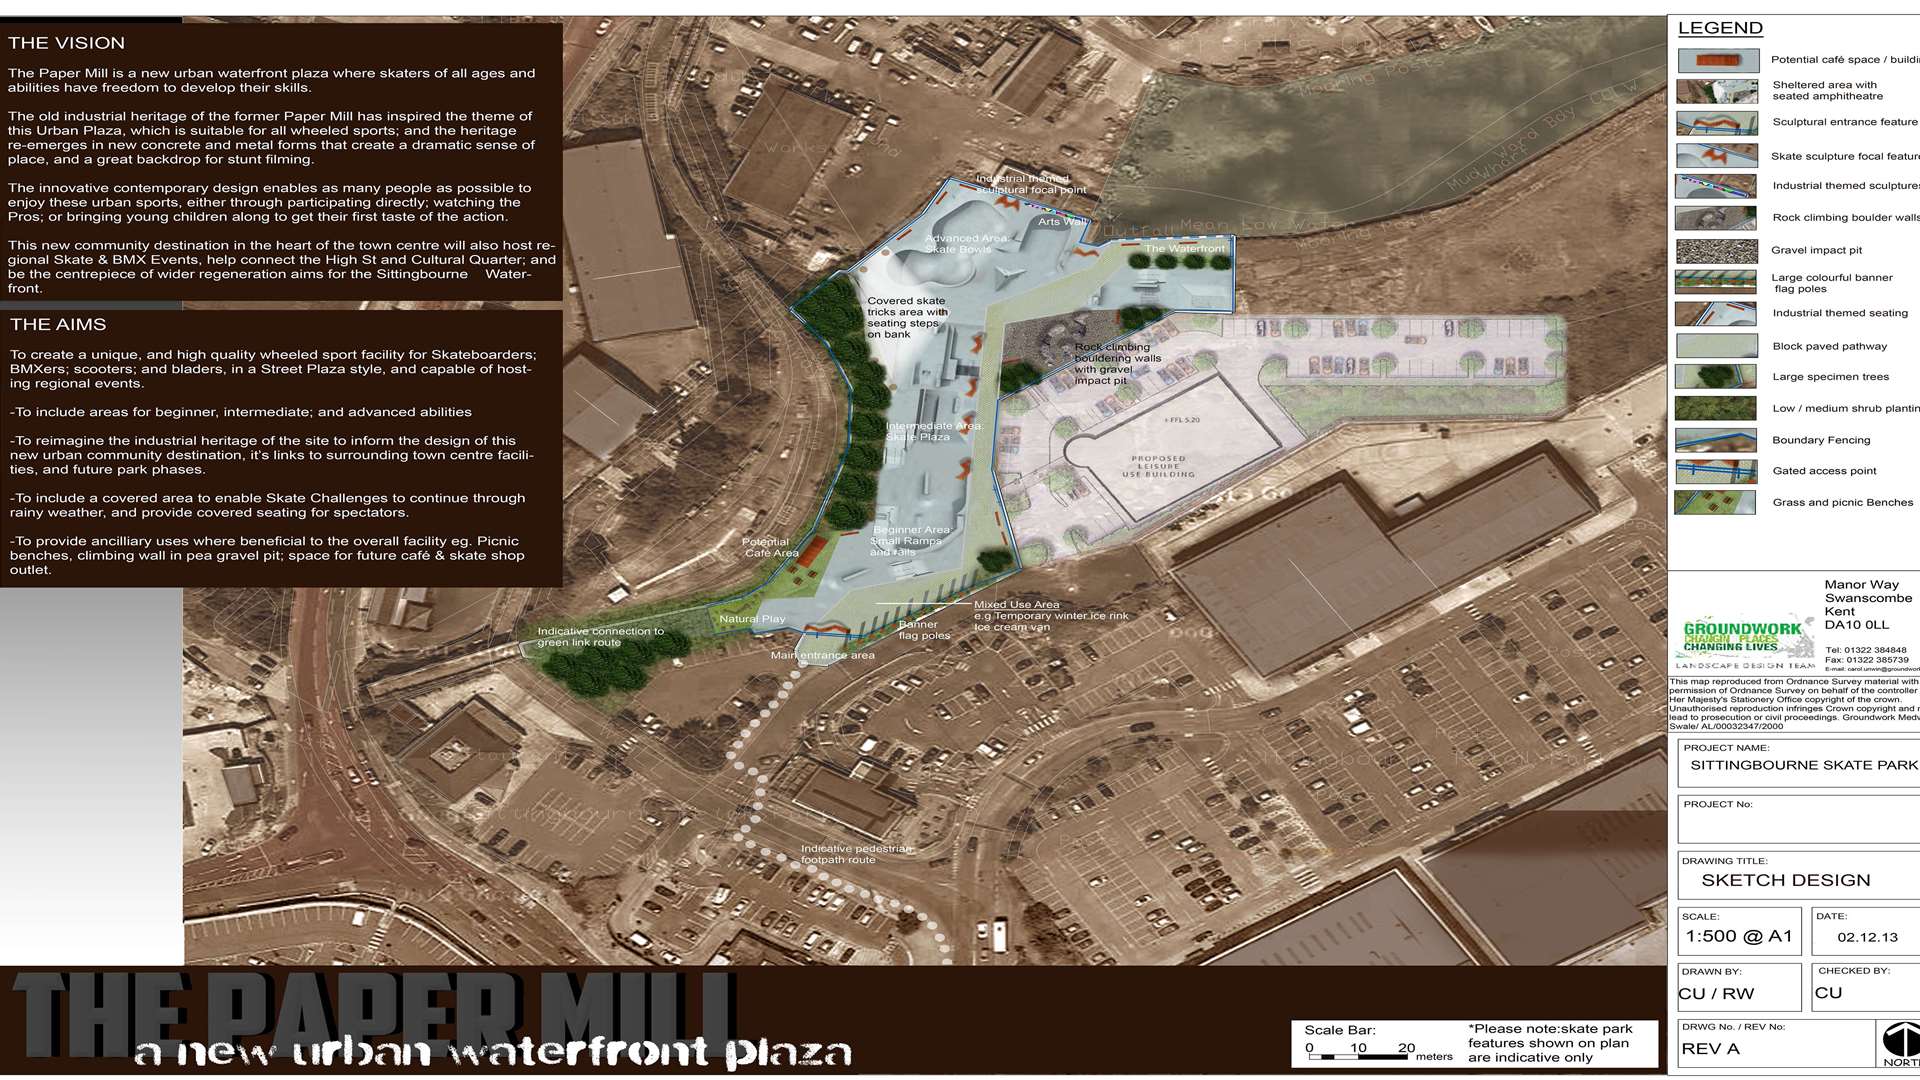 Outline plans for the proposed skatepark